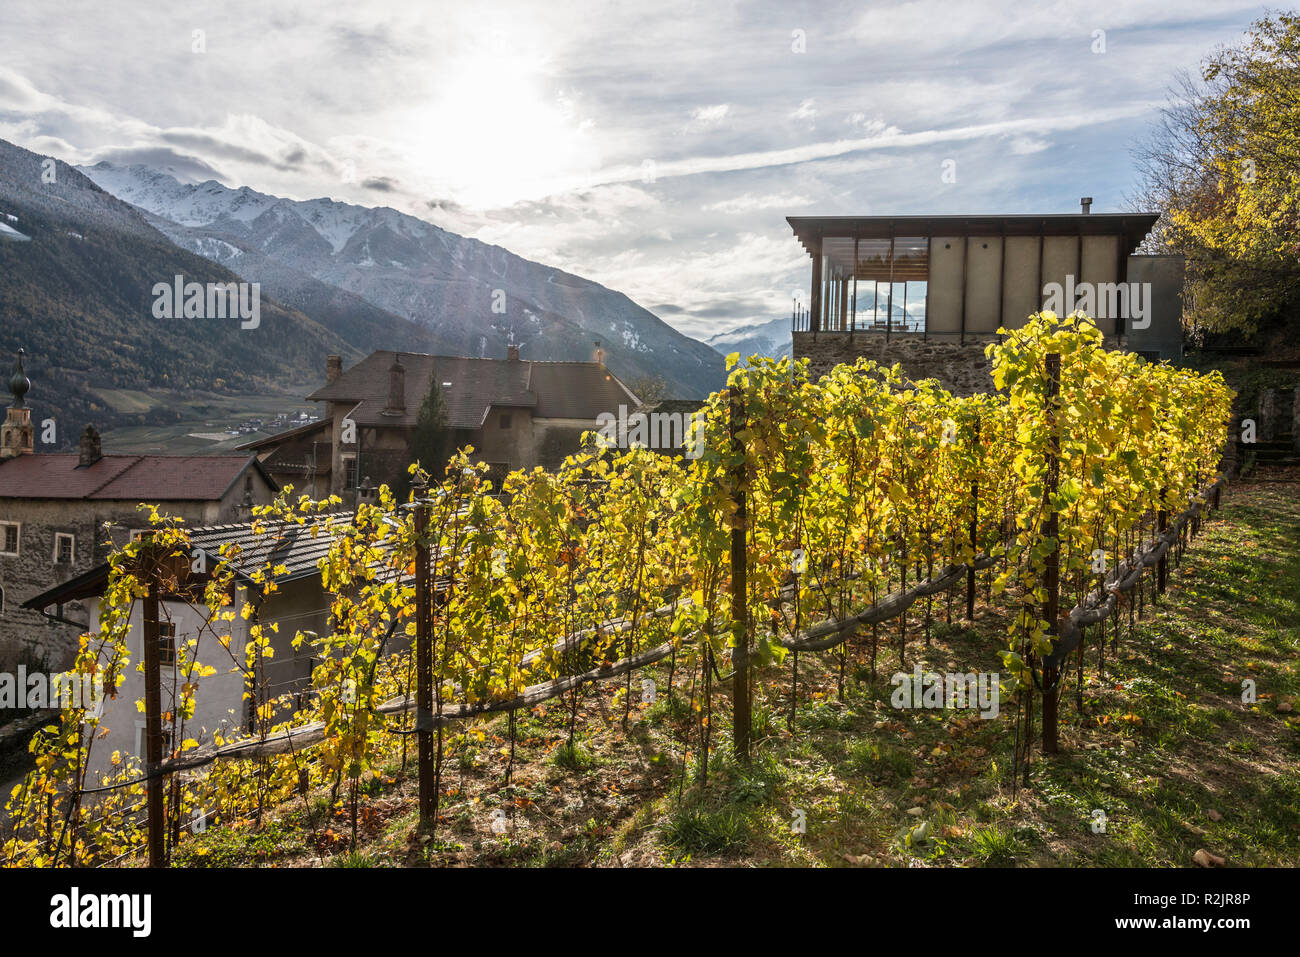 Italy, South Tyrol, Alto Adige, Vinschgau Kastelbell, Galsaun, Sonnenberg, Viticulture, Lehengut, Winery / Organic Agriculture of Thomas Plack Stock Photo